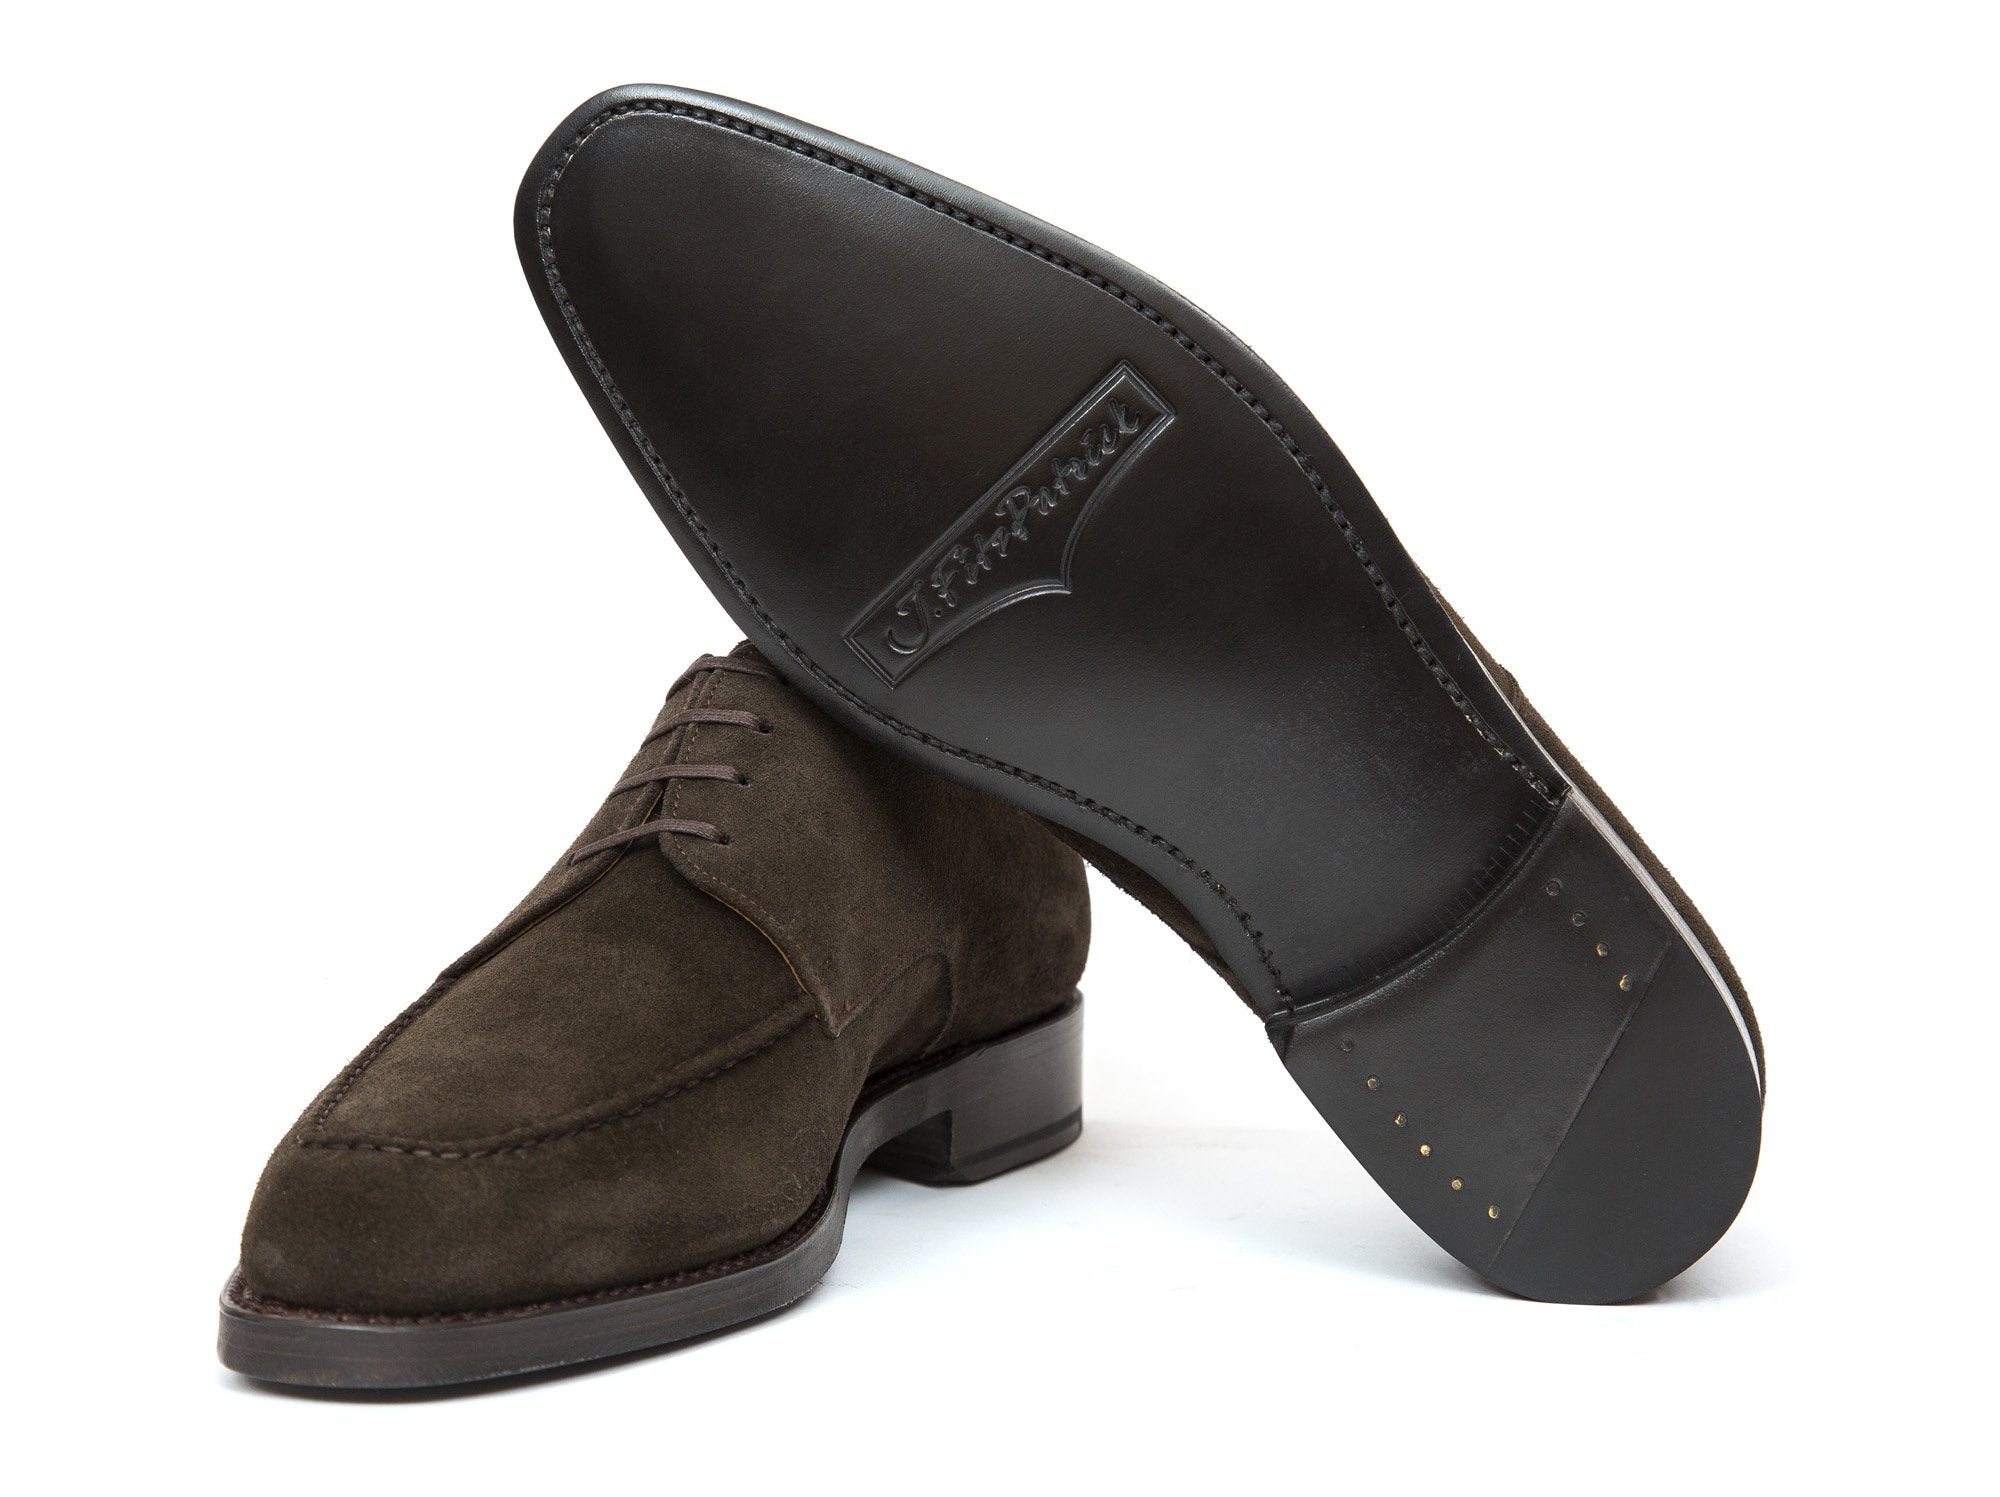 J.FitzPatrick Footwear - Lynwood - Bitter Chocolate Suede - LPB Last - Double Leather Sole